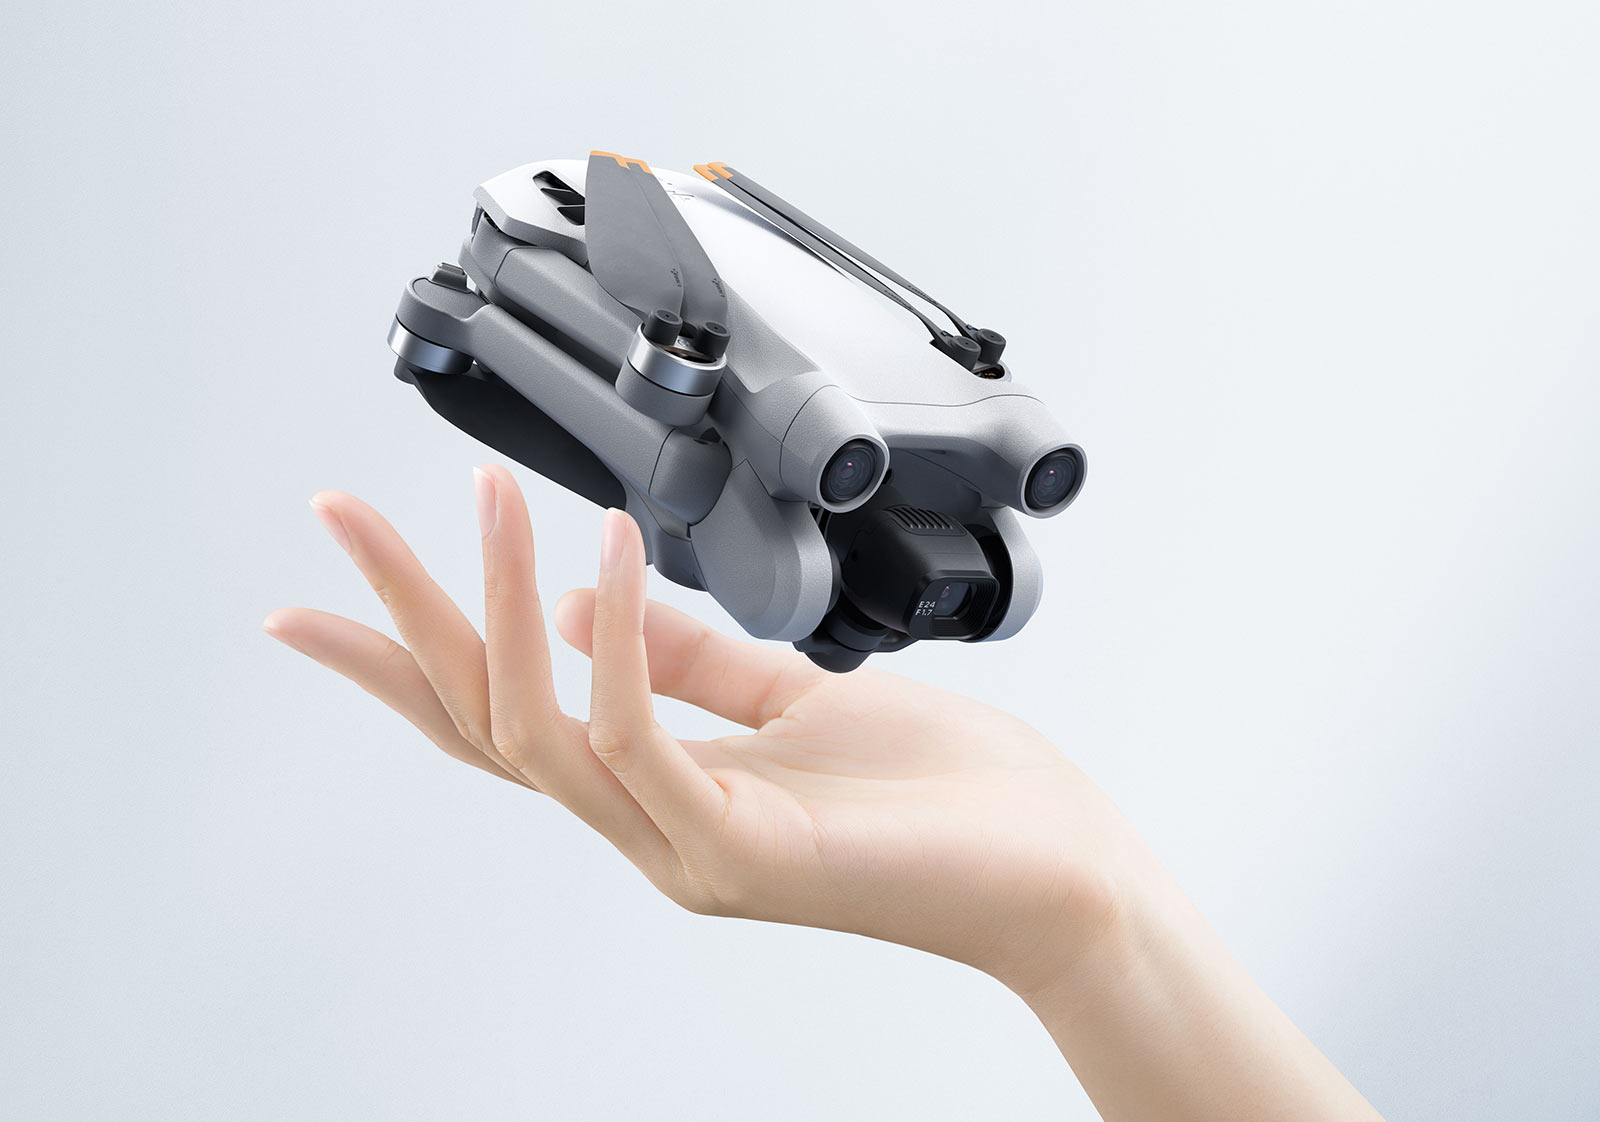 dji mini 3 pro lightweight drone folded up in palm of hand